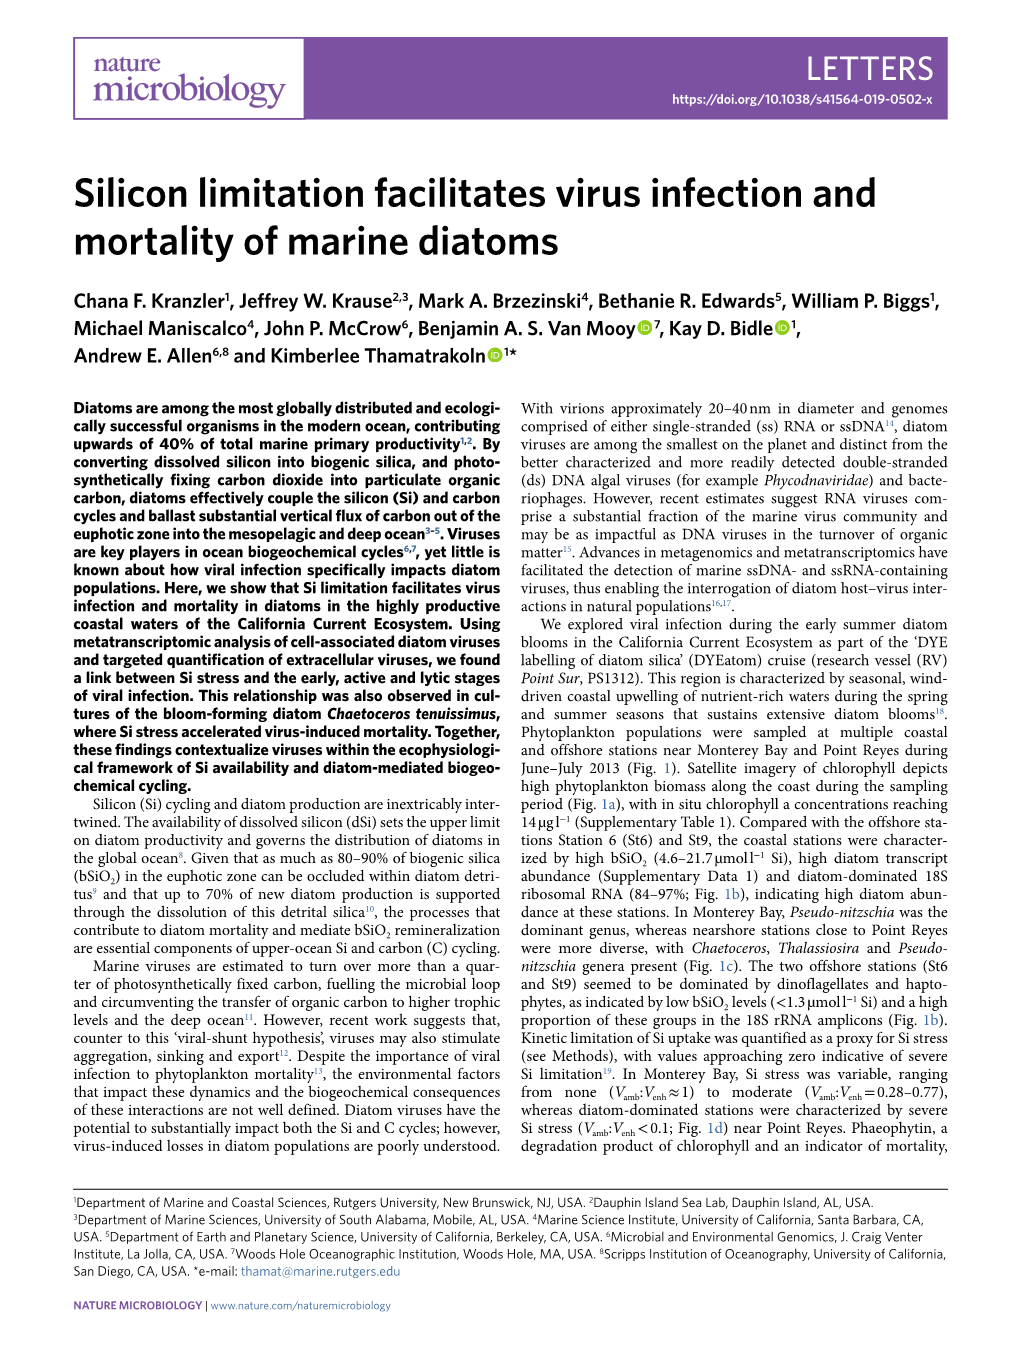 Silicon Limitation Facilitates Virus Infection and Mortality of Marine Diatoms